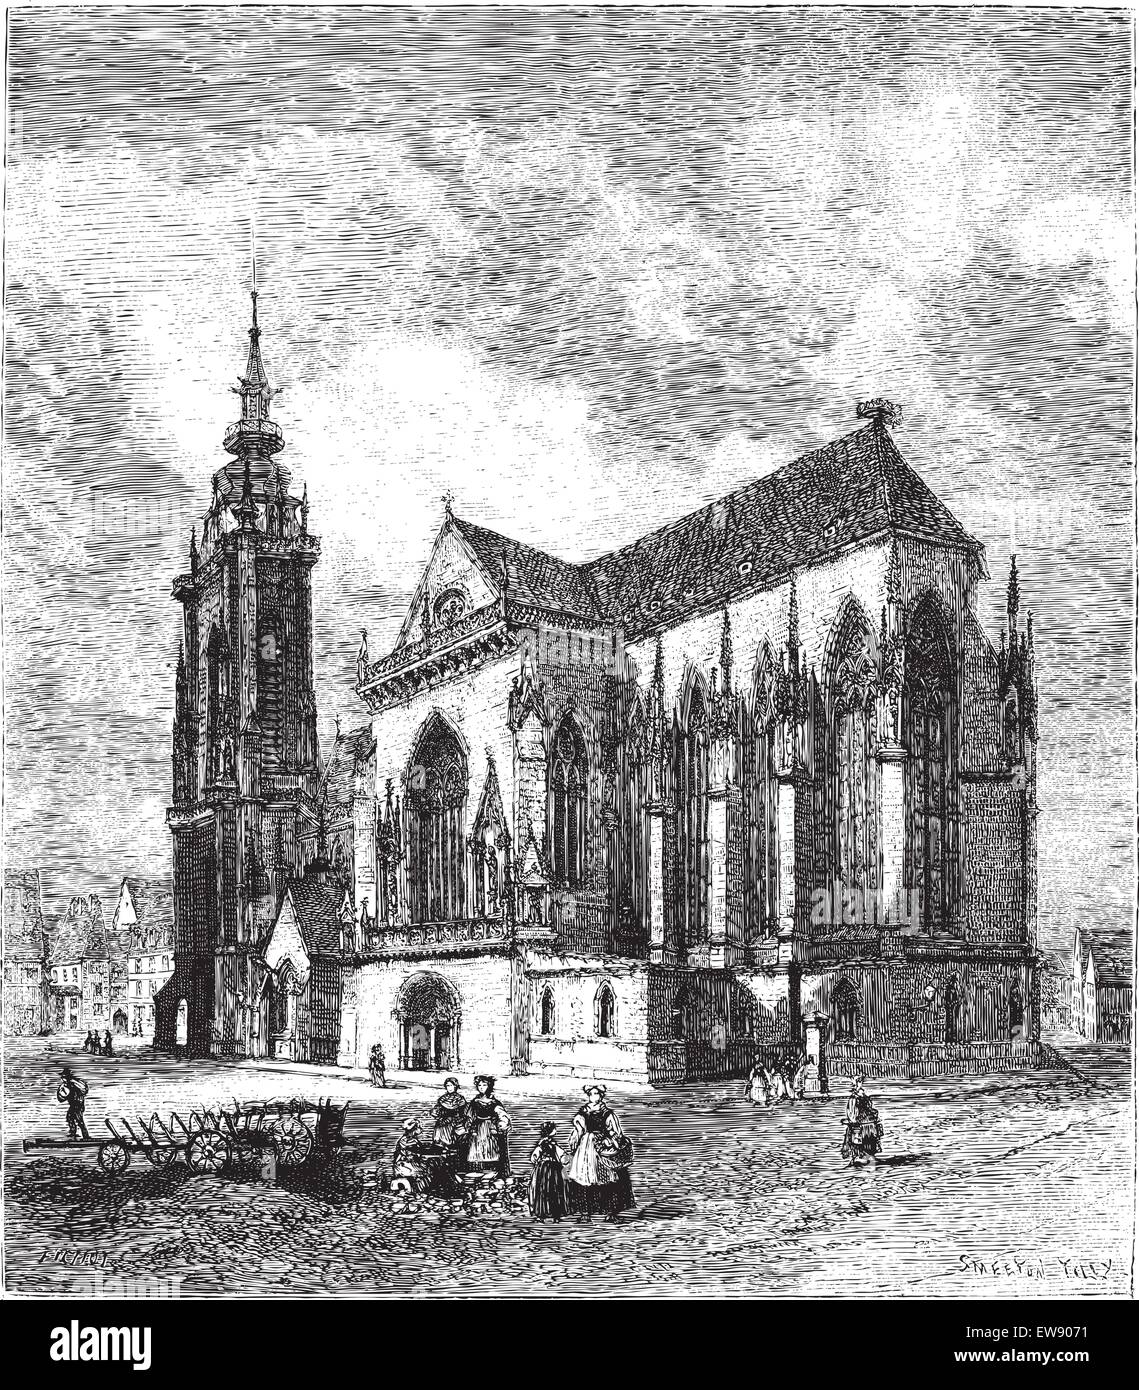 Sankt-Martins Kirche in Colmar, Frankreich, graviert Vintage Illustration. Le Magasin Pittoresque - Larive und Fleury - 1874 Stock Vektor